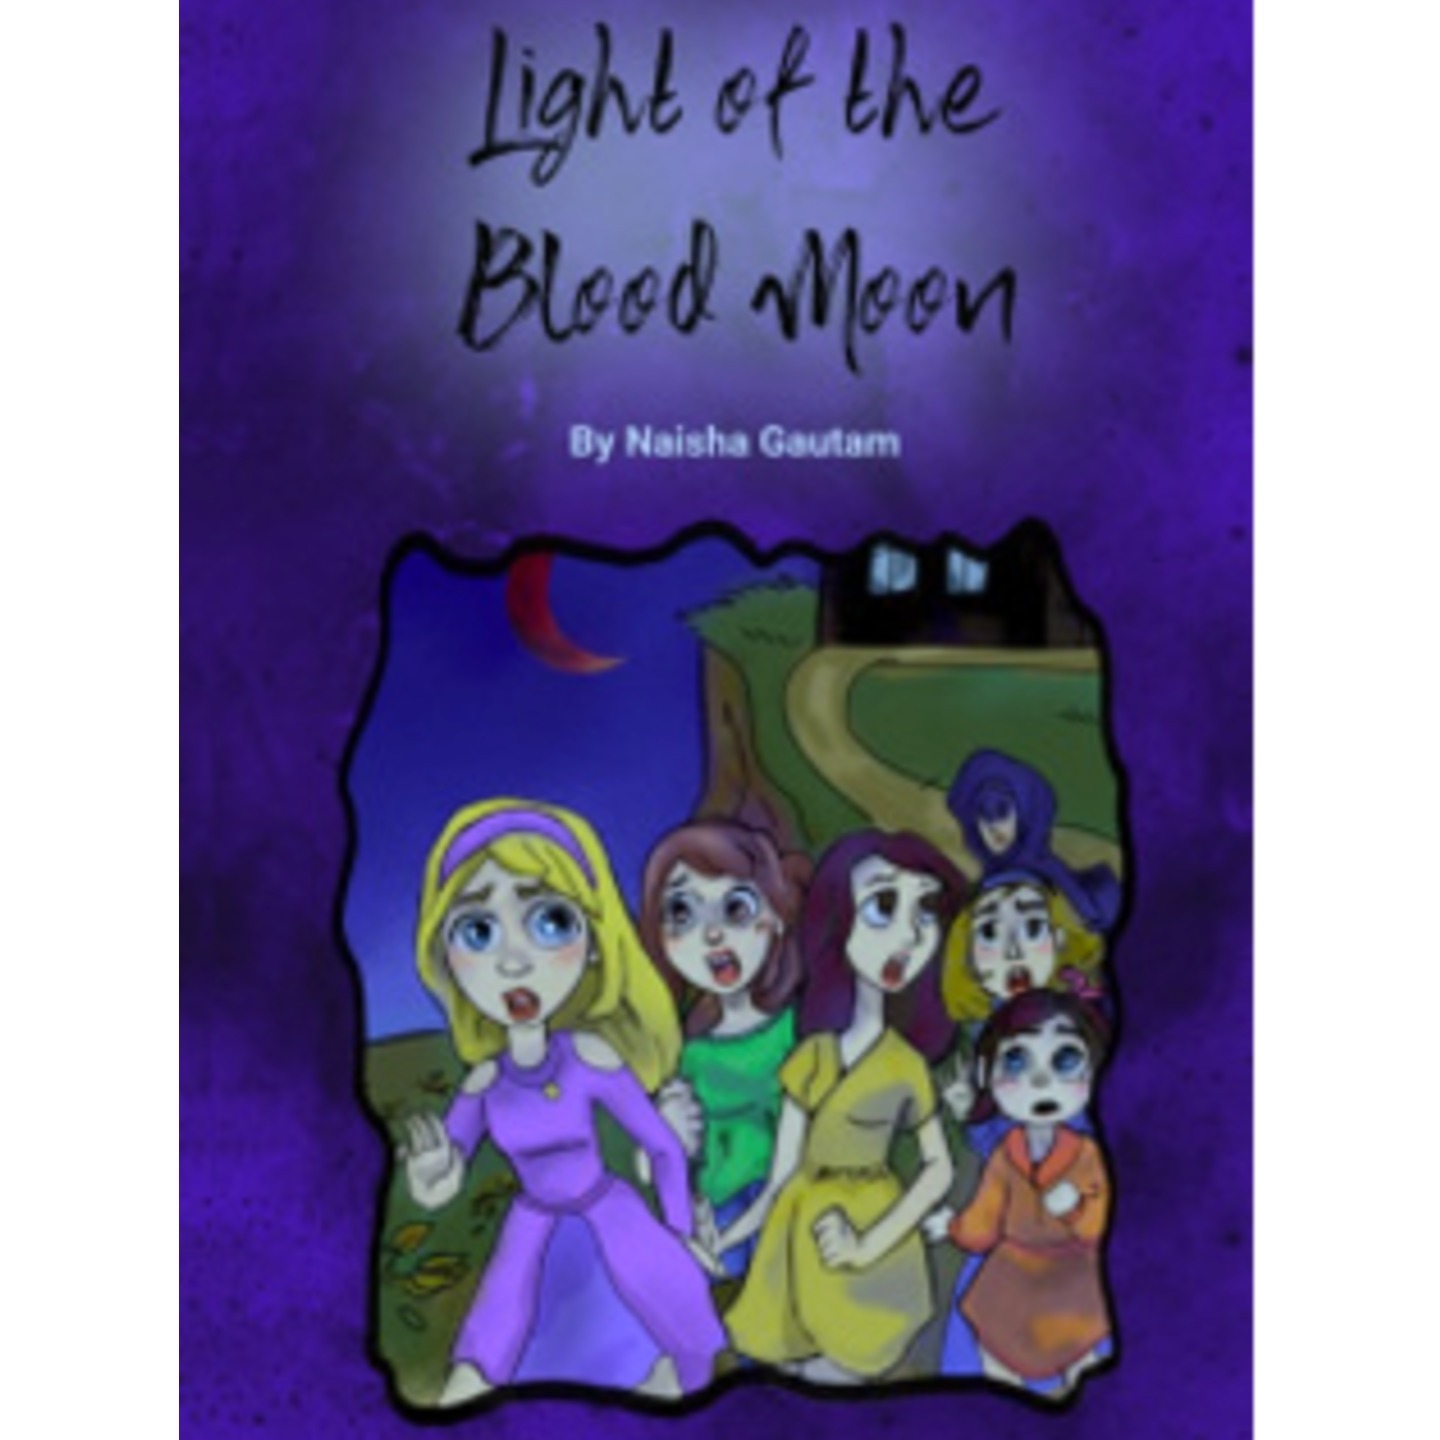 Light of the Blood Moon by Naisha Gautam